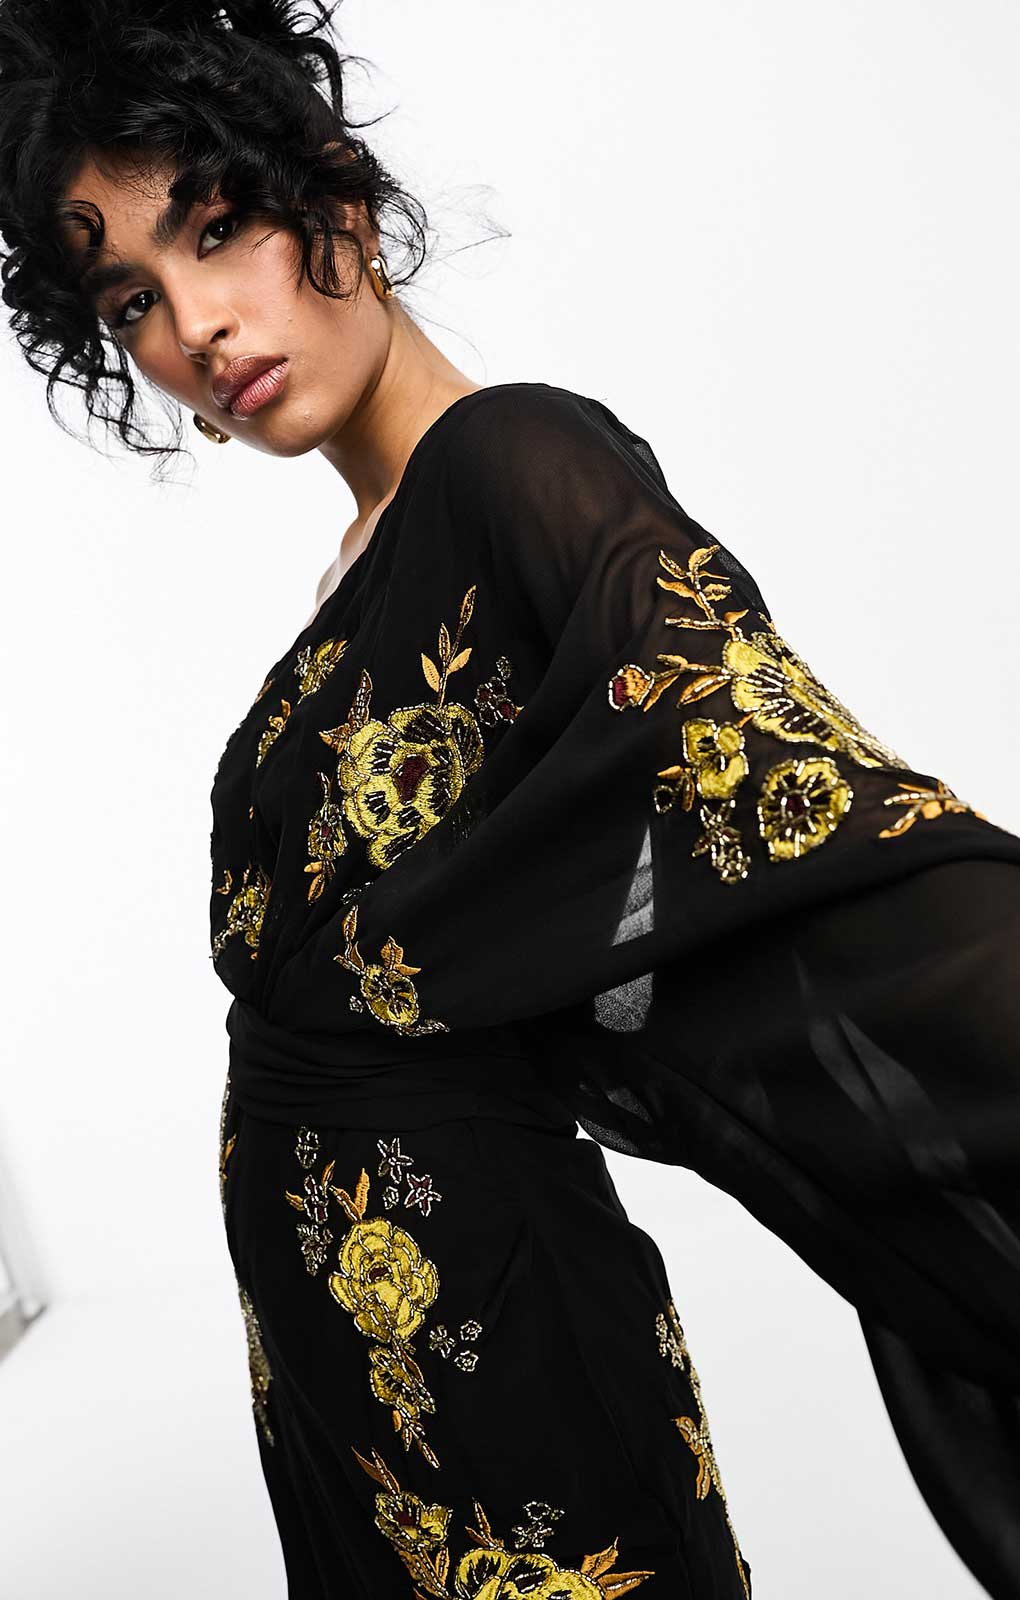 Asos Design One Shoulder Chiffon Mini Dress In Black With Marigold Floral Artwork product image